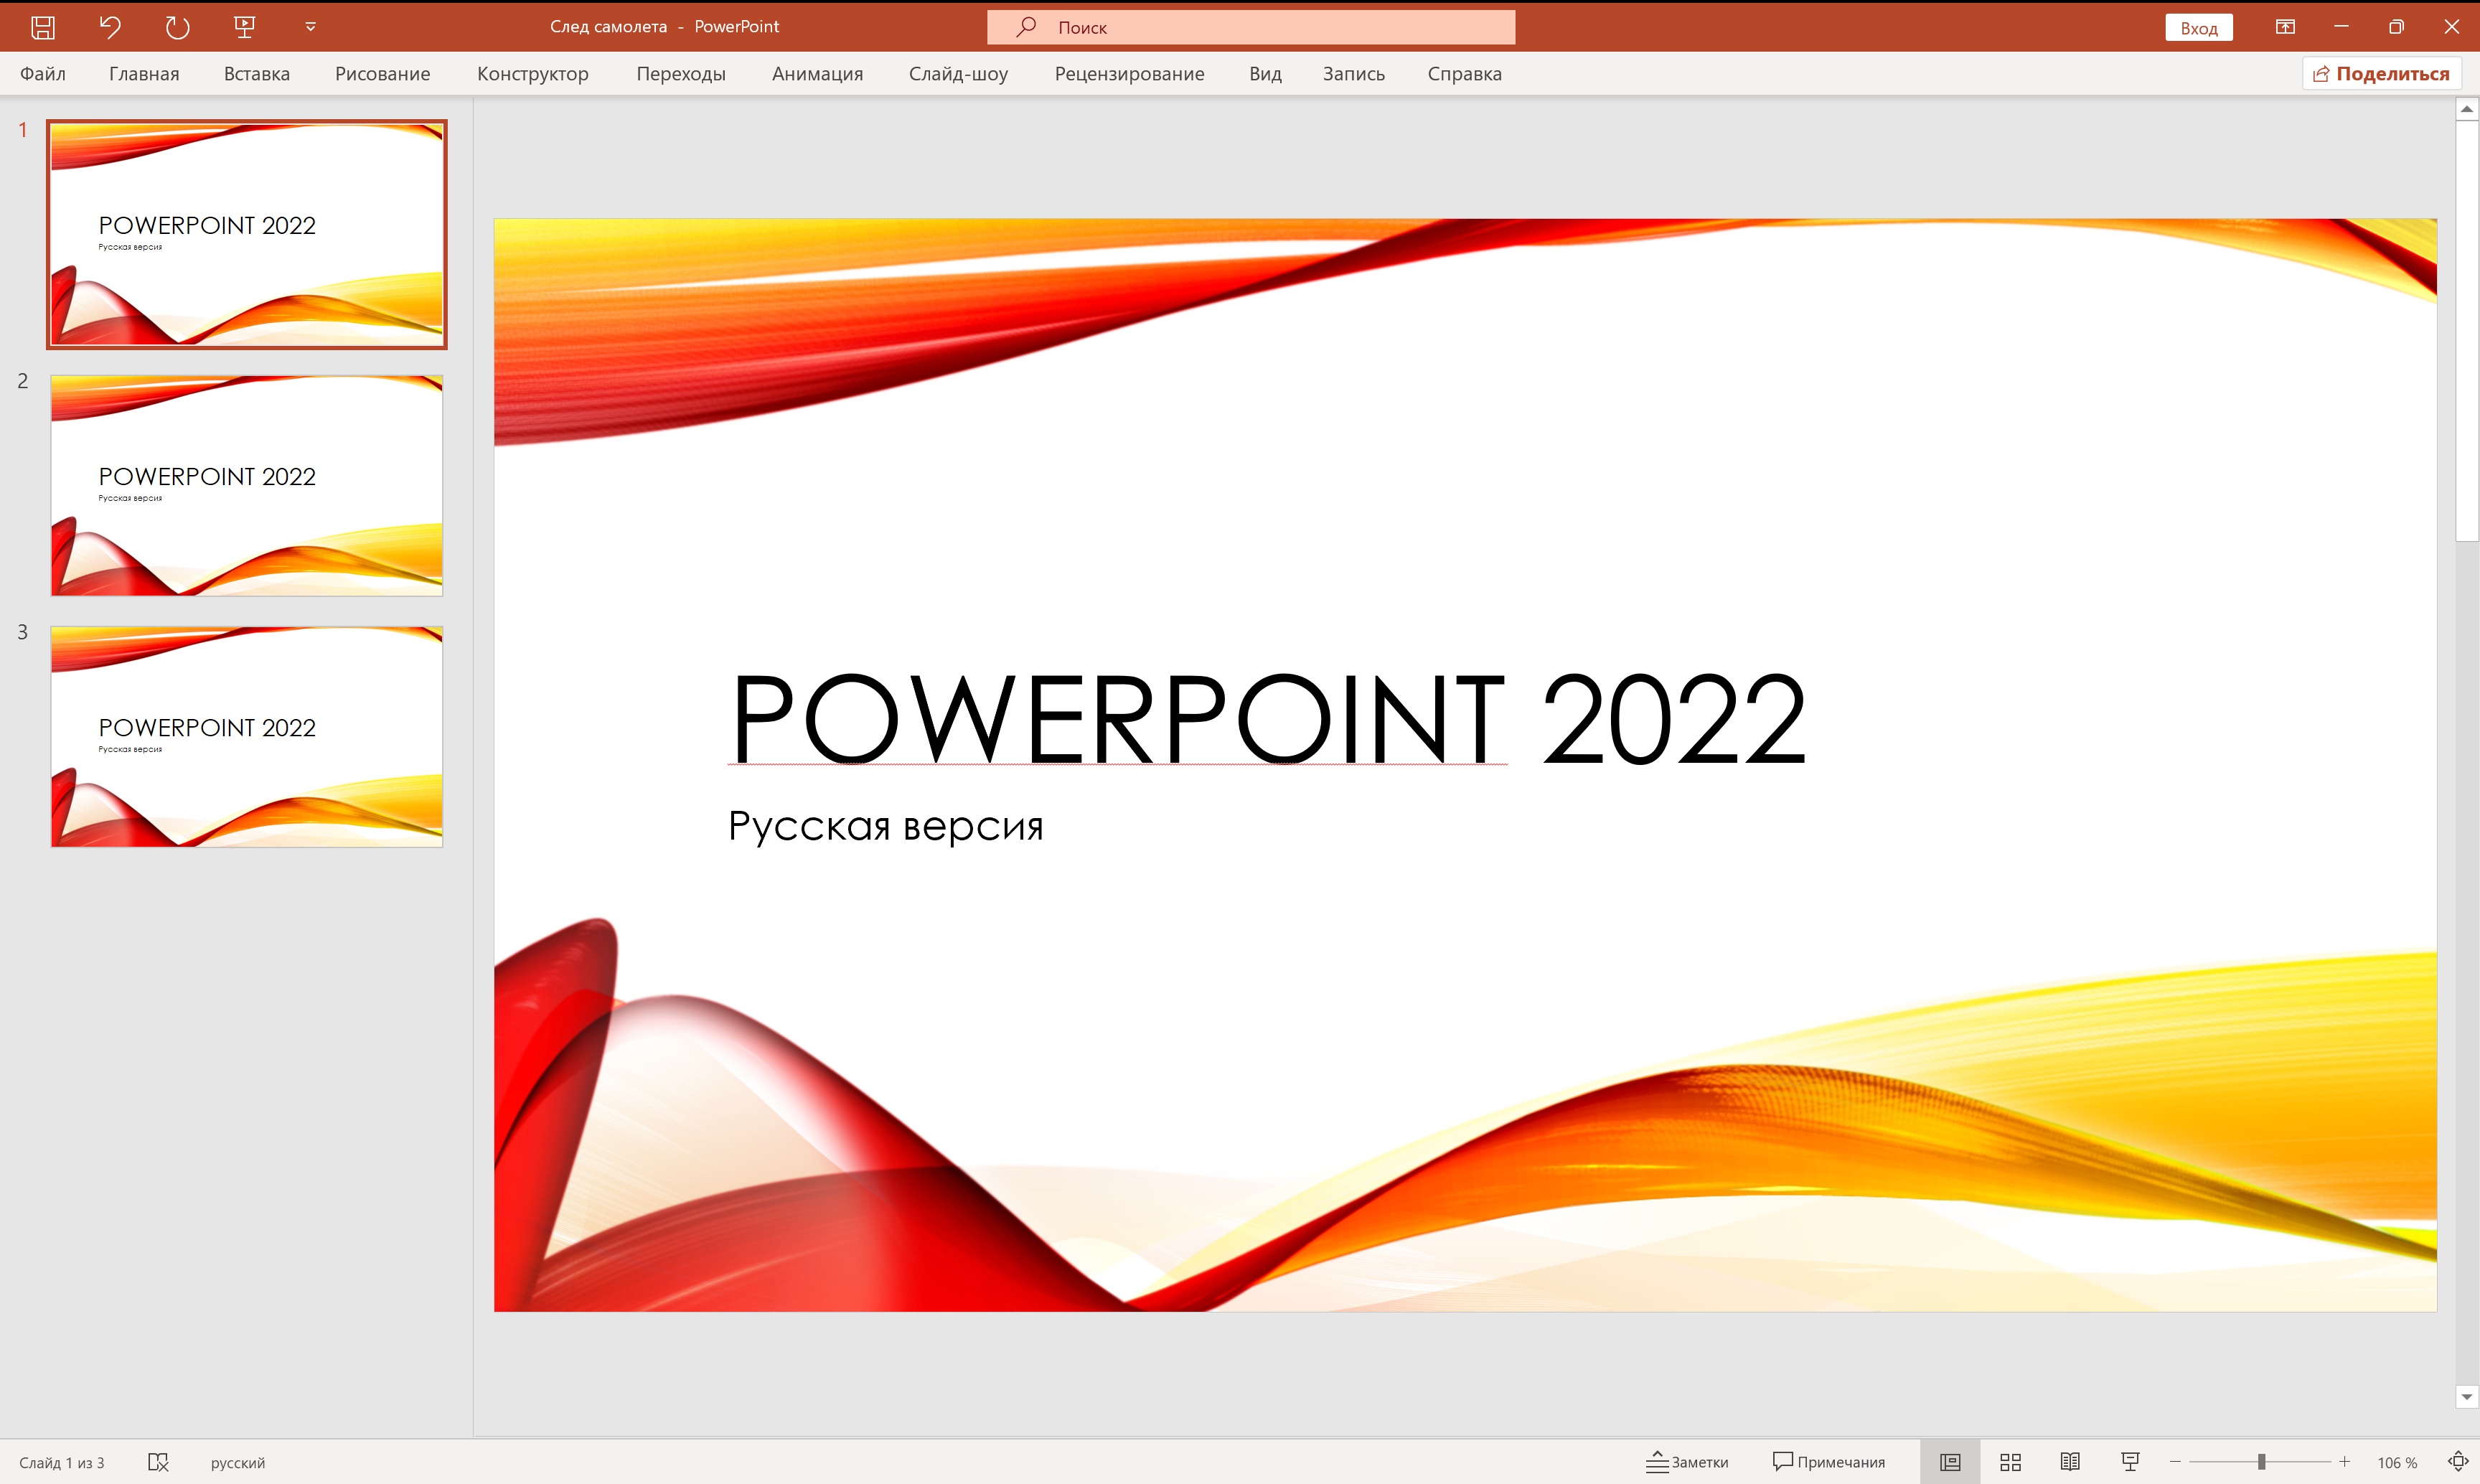 PowerPoint 2022